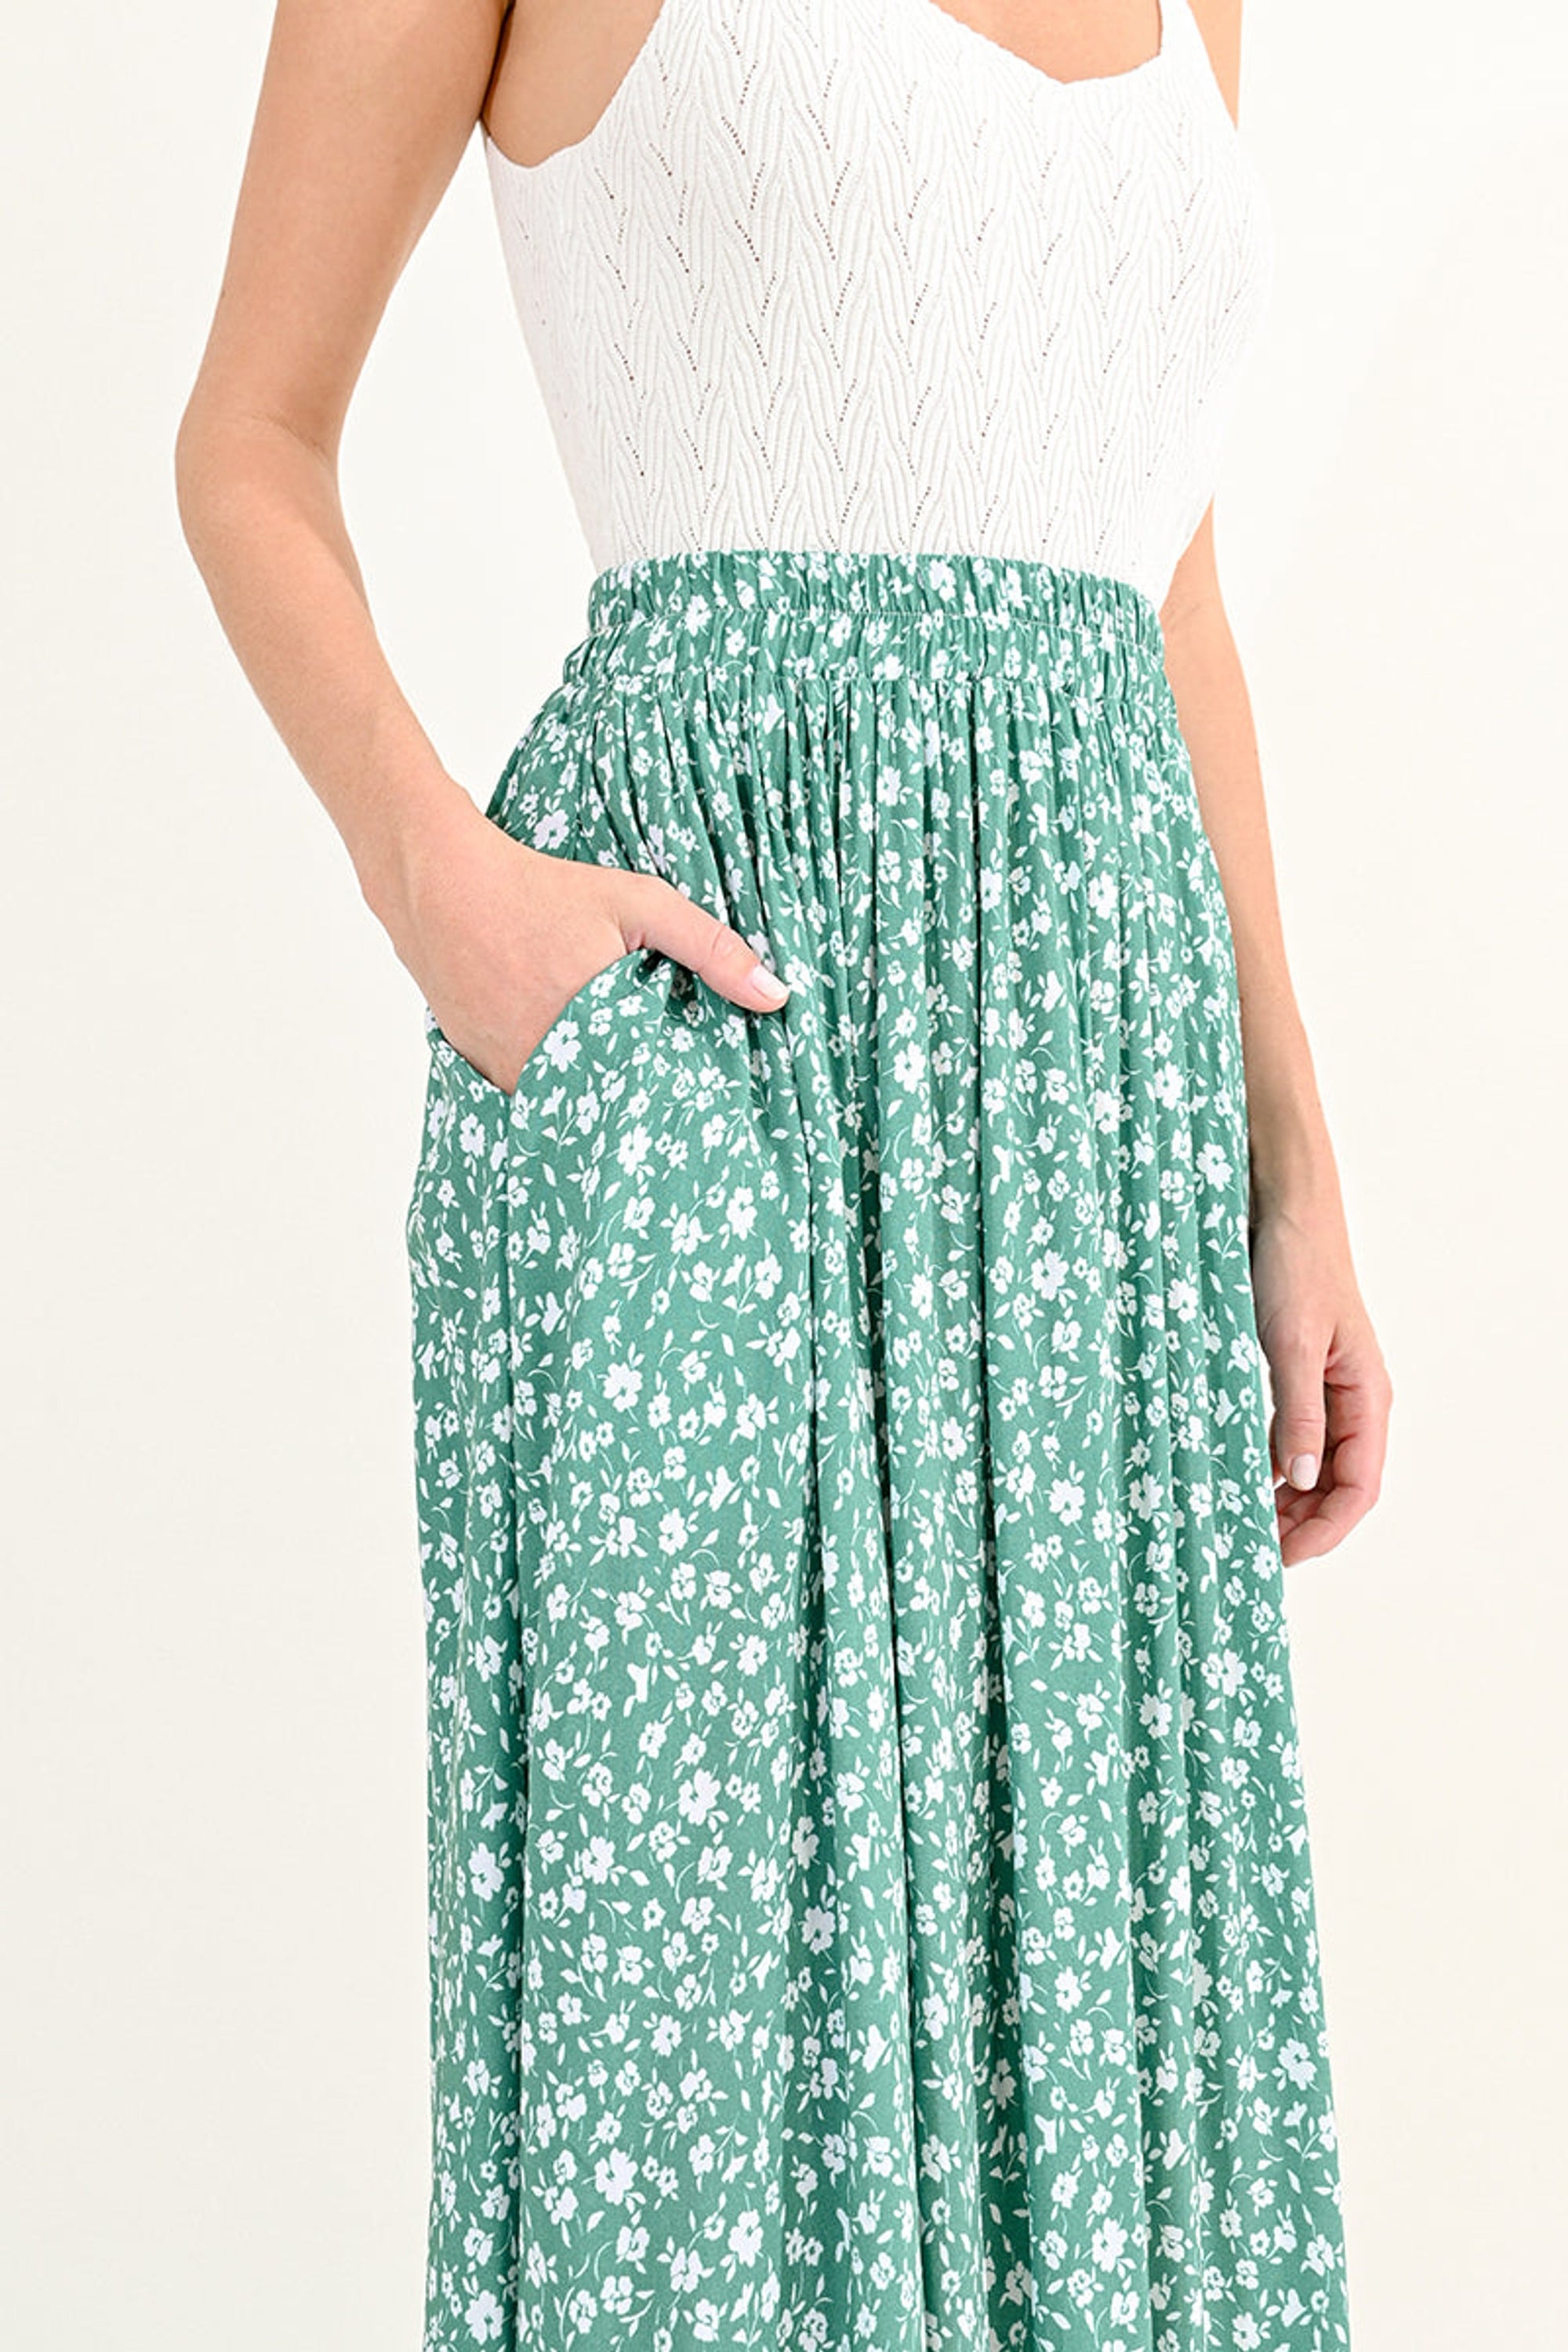 Molly Bracken Skirt in Green Diane - clever alice